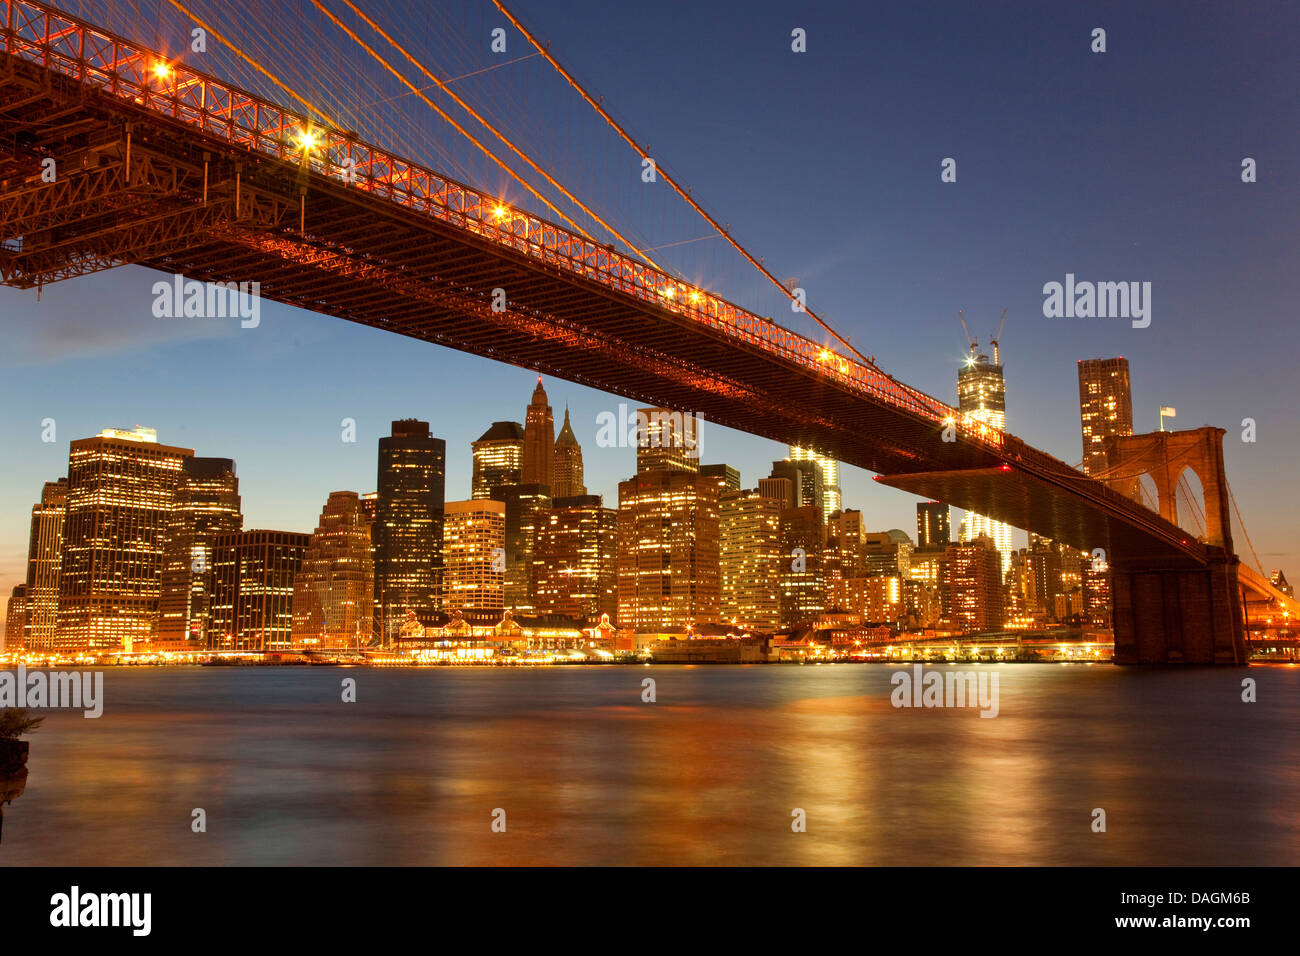 Brooklyn Bridge at night with illuminated skyline of New York in the background, USA, New York (state), Brooklyn, New York City Stock Photo